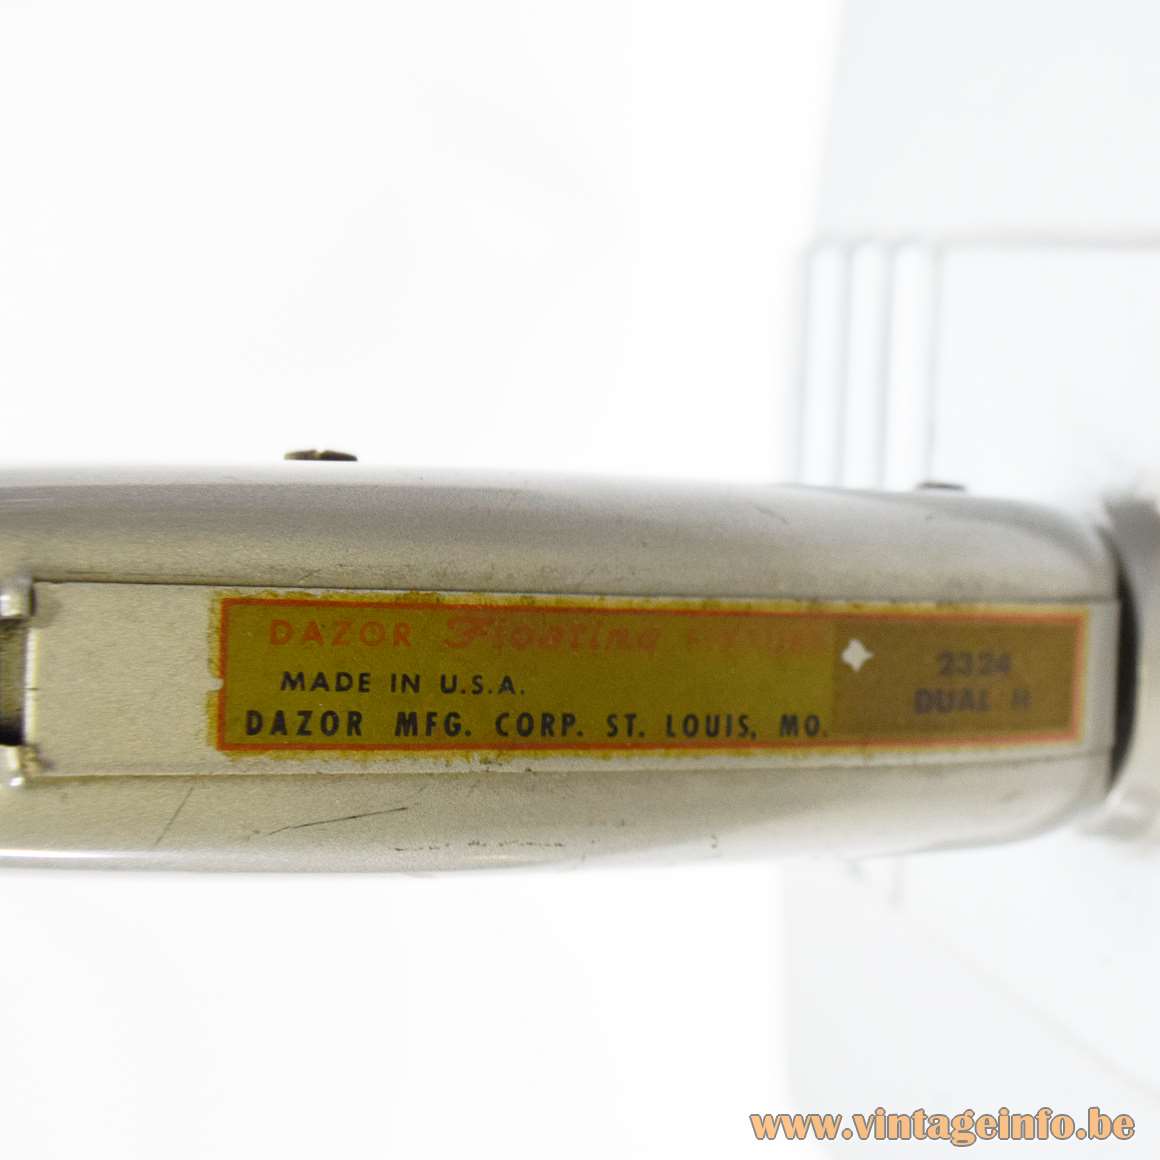 Dazor Floating Fixture 2324 work lamp rectangular label & logo 1940s 1950s 1960s 1970s